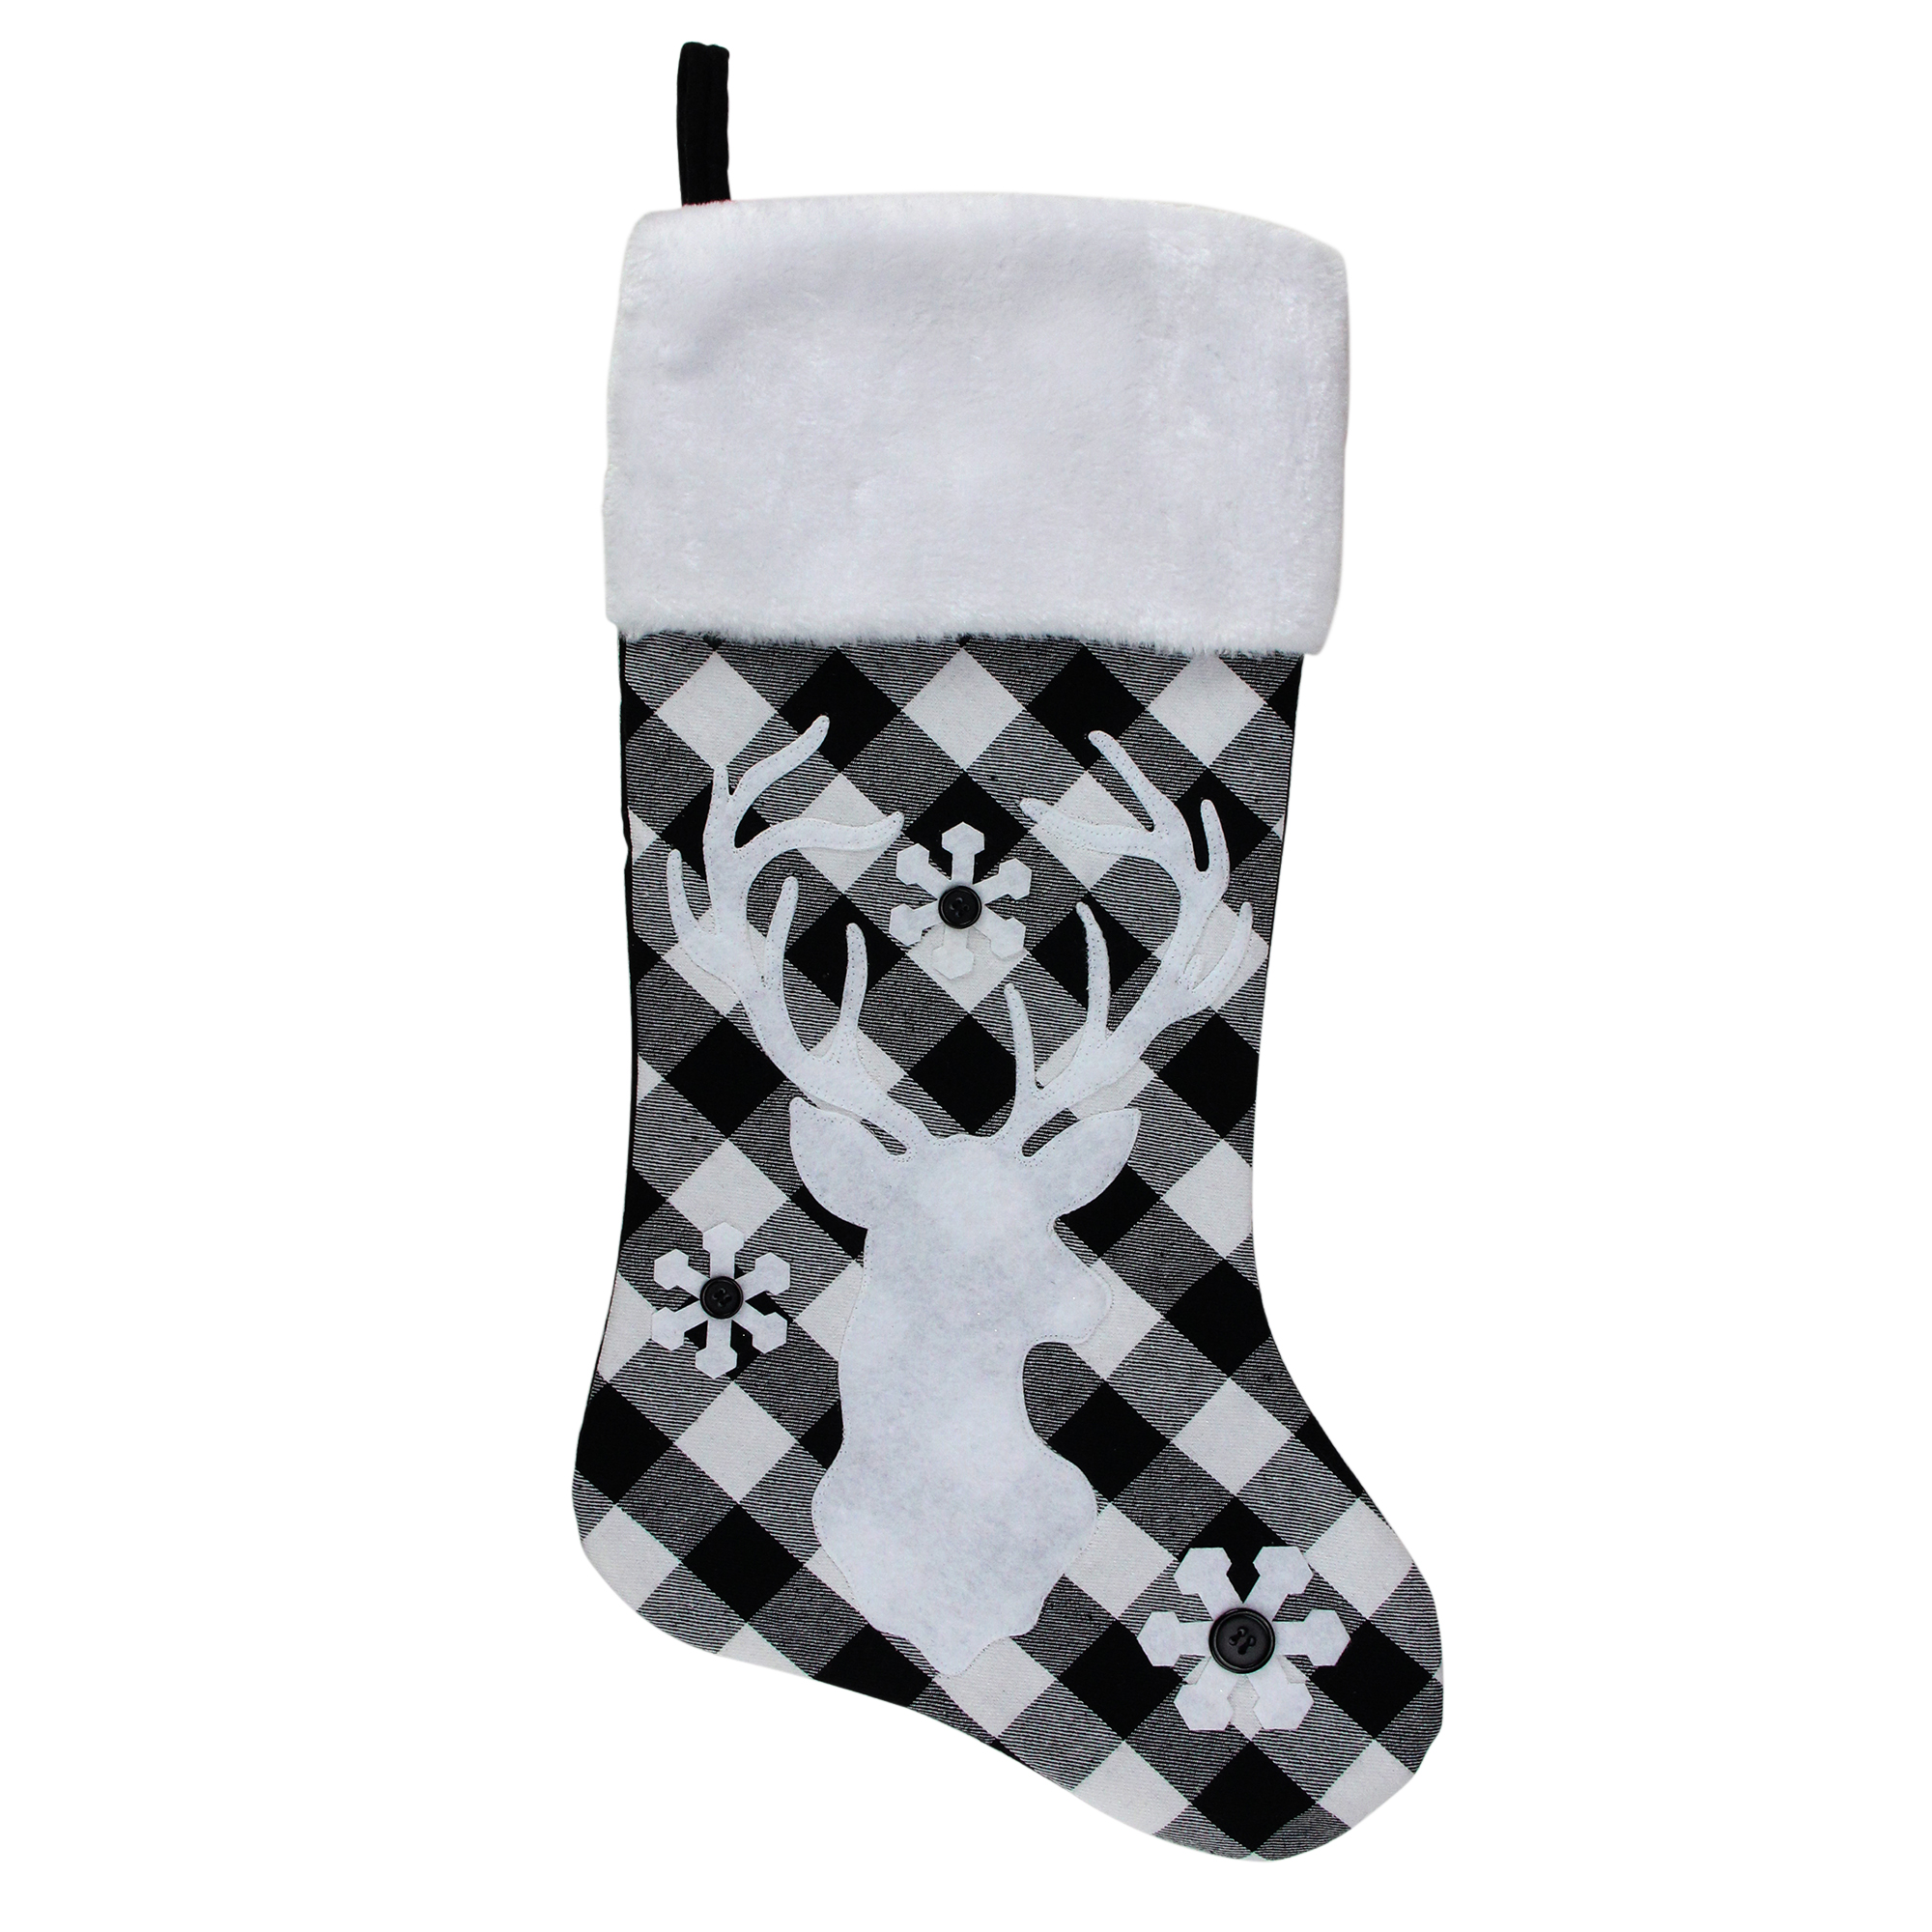 Northlight 20.5" Black and White Plaid Rustic Reindeer Snowflake Christmas Stocking - image 1 of 3